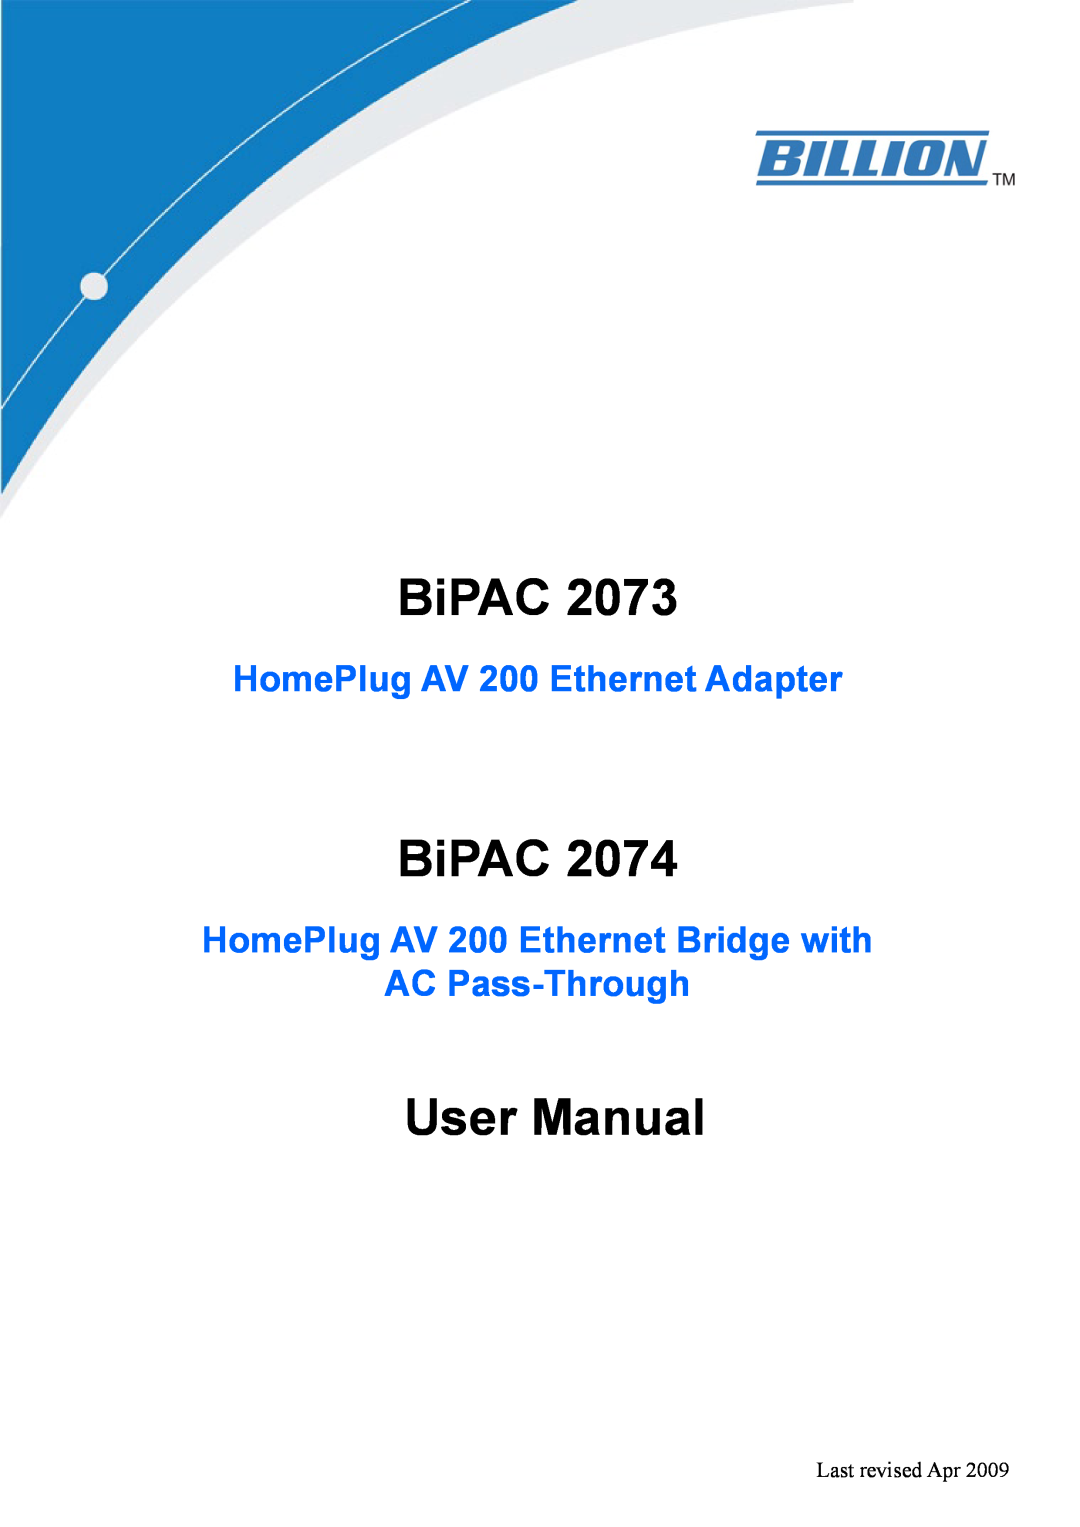 Billion Electric Company 2073 user manual BiPAC, User Manual, HomePlug AV 200 Ethernet Adapter, Last revised Apr 